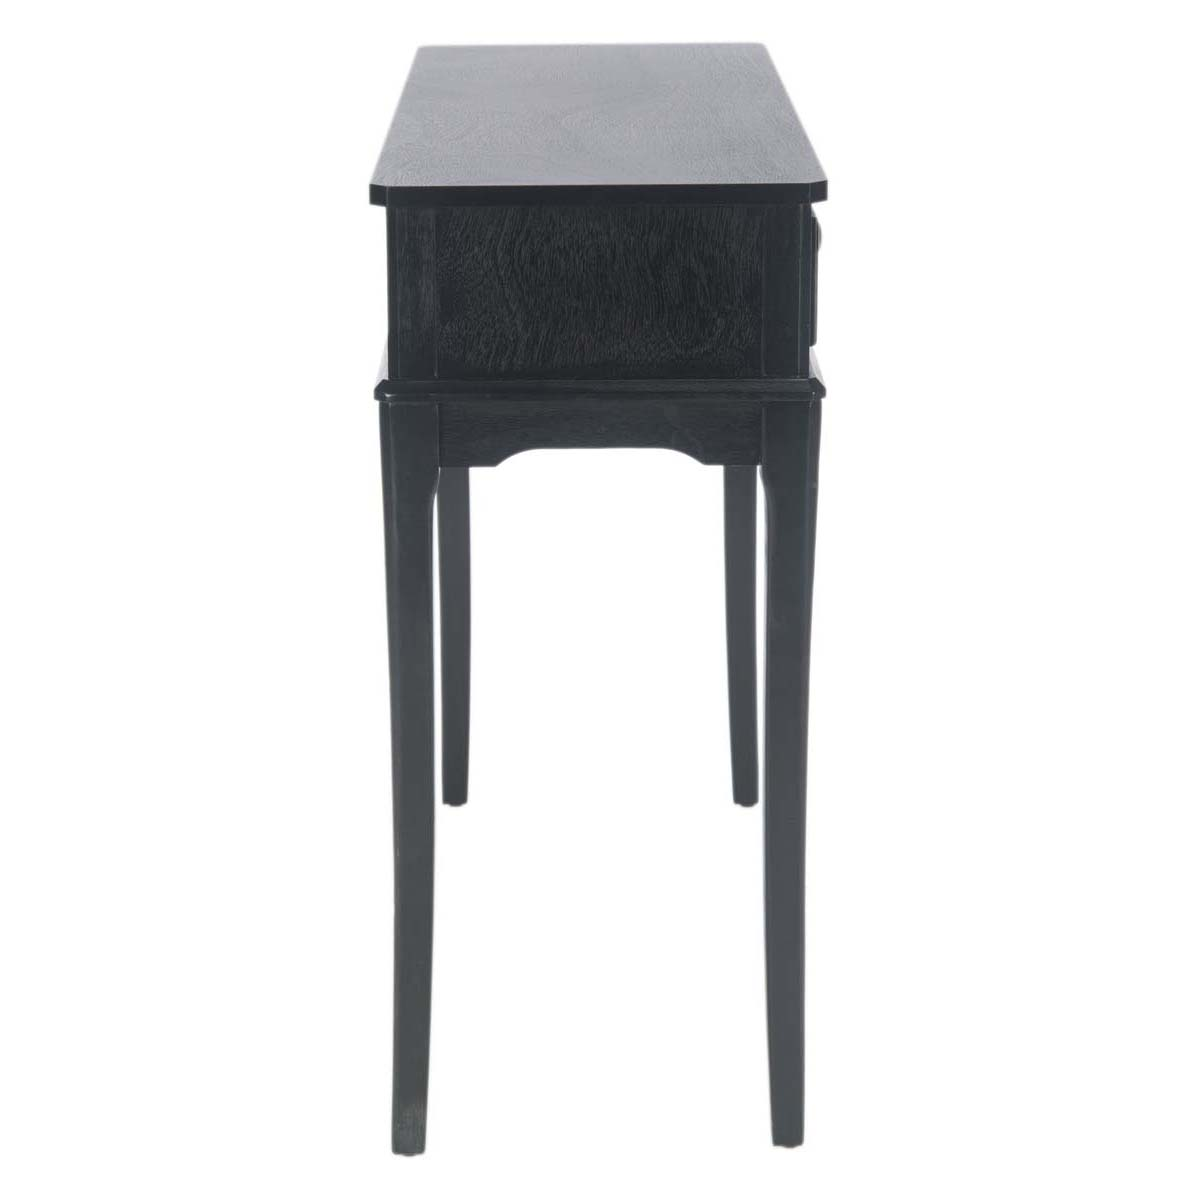 Safavieh Opal 2Drw Console Table, CNS5726 - Black